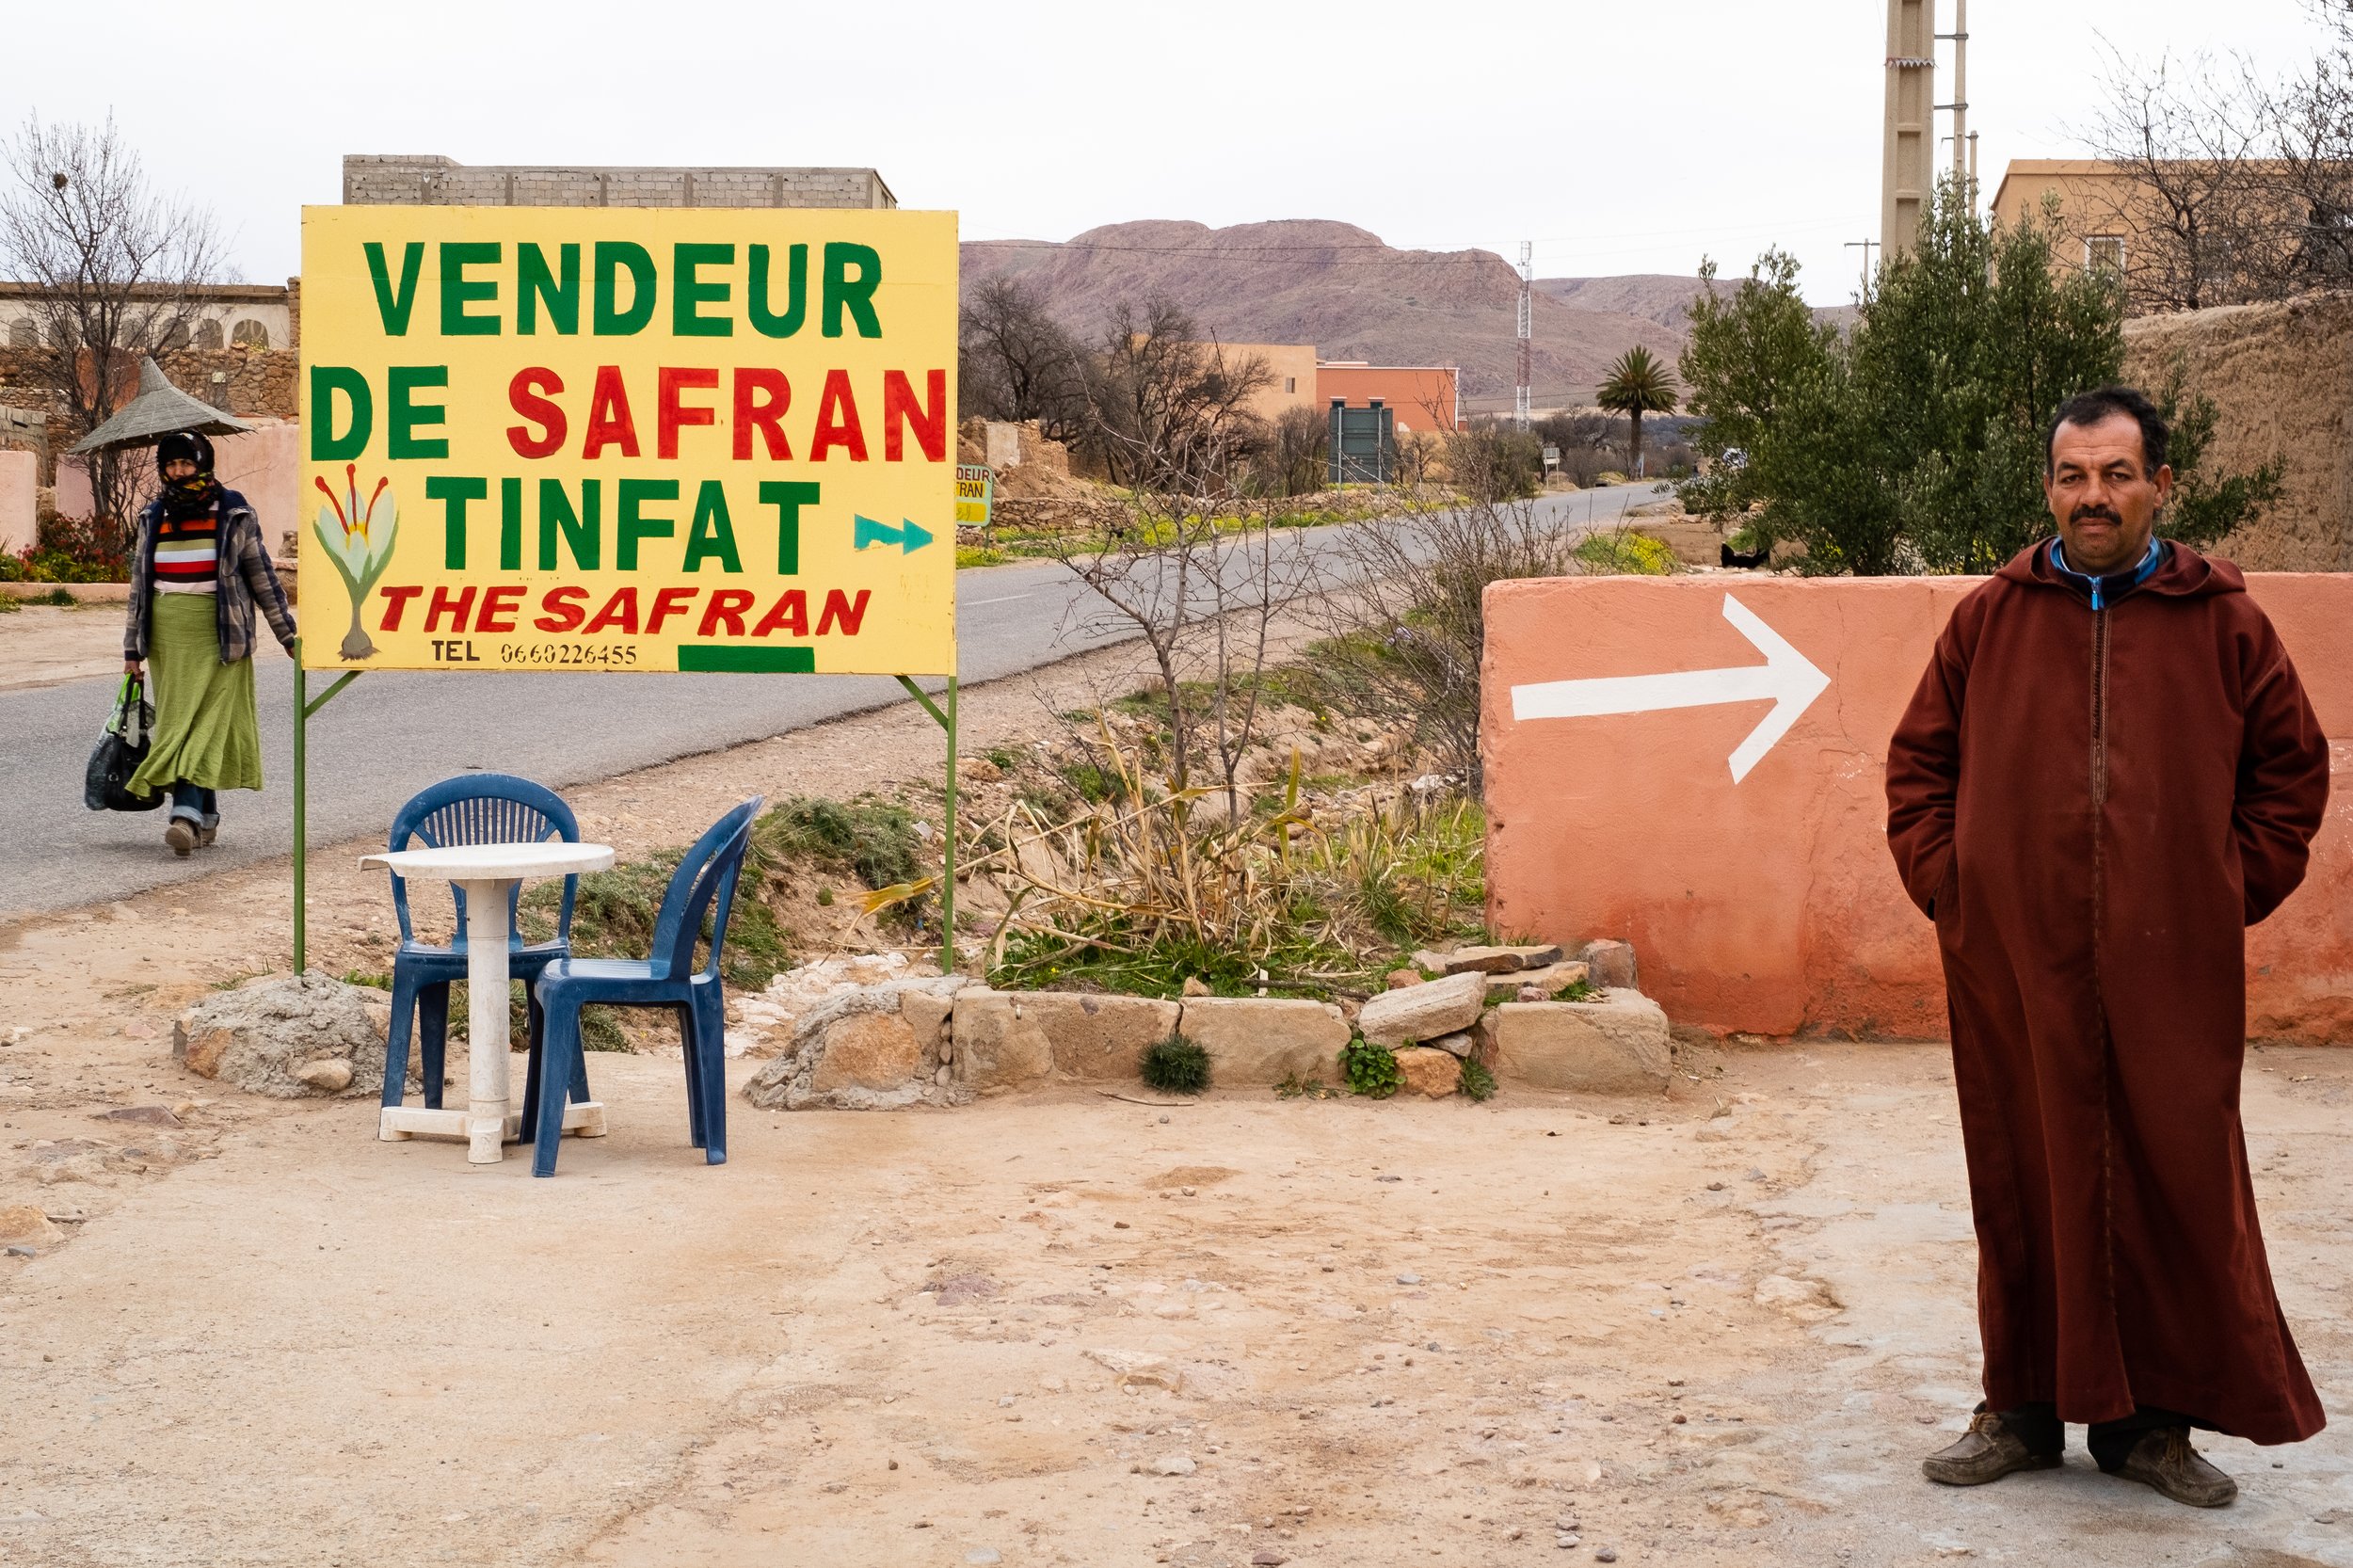 Vendedor de azafrán. Tinfat, Marruecos